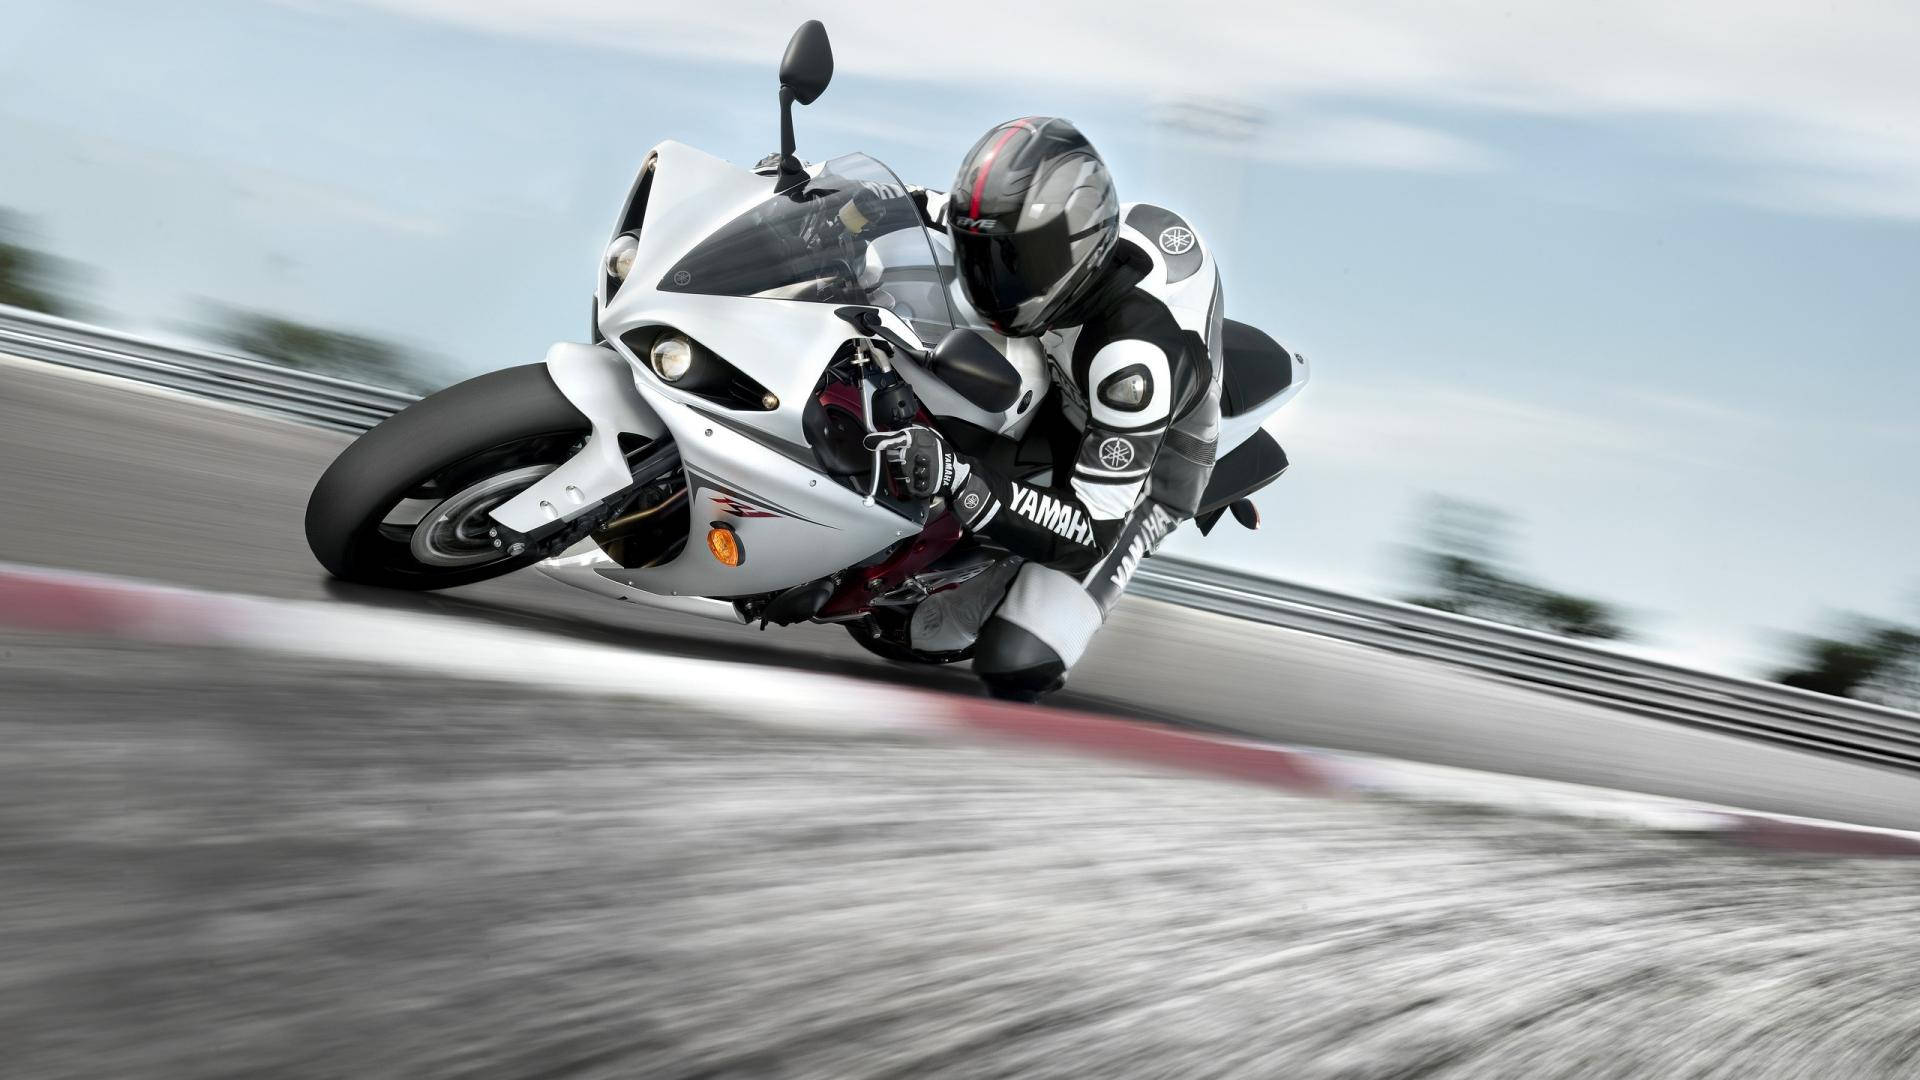 Racing White-black Motorcycle Background